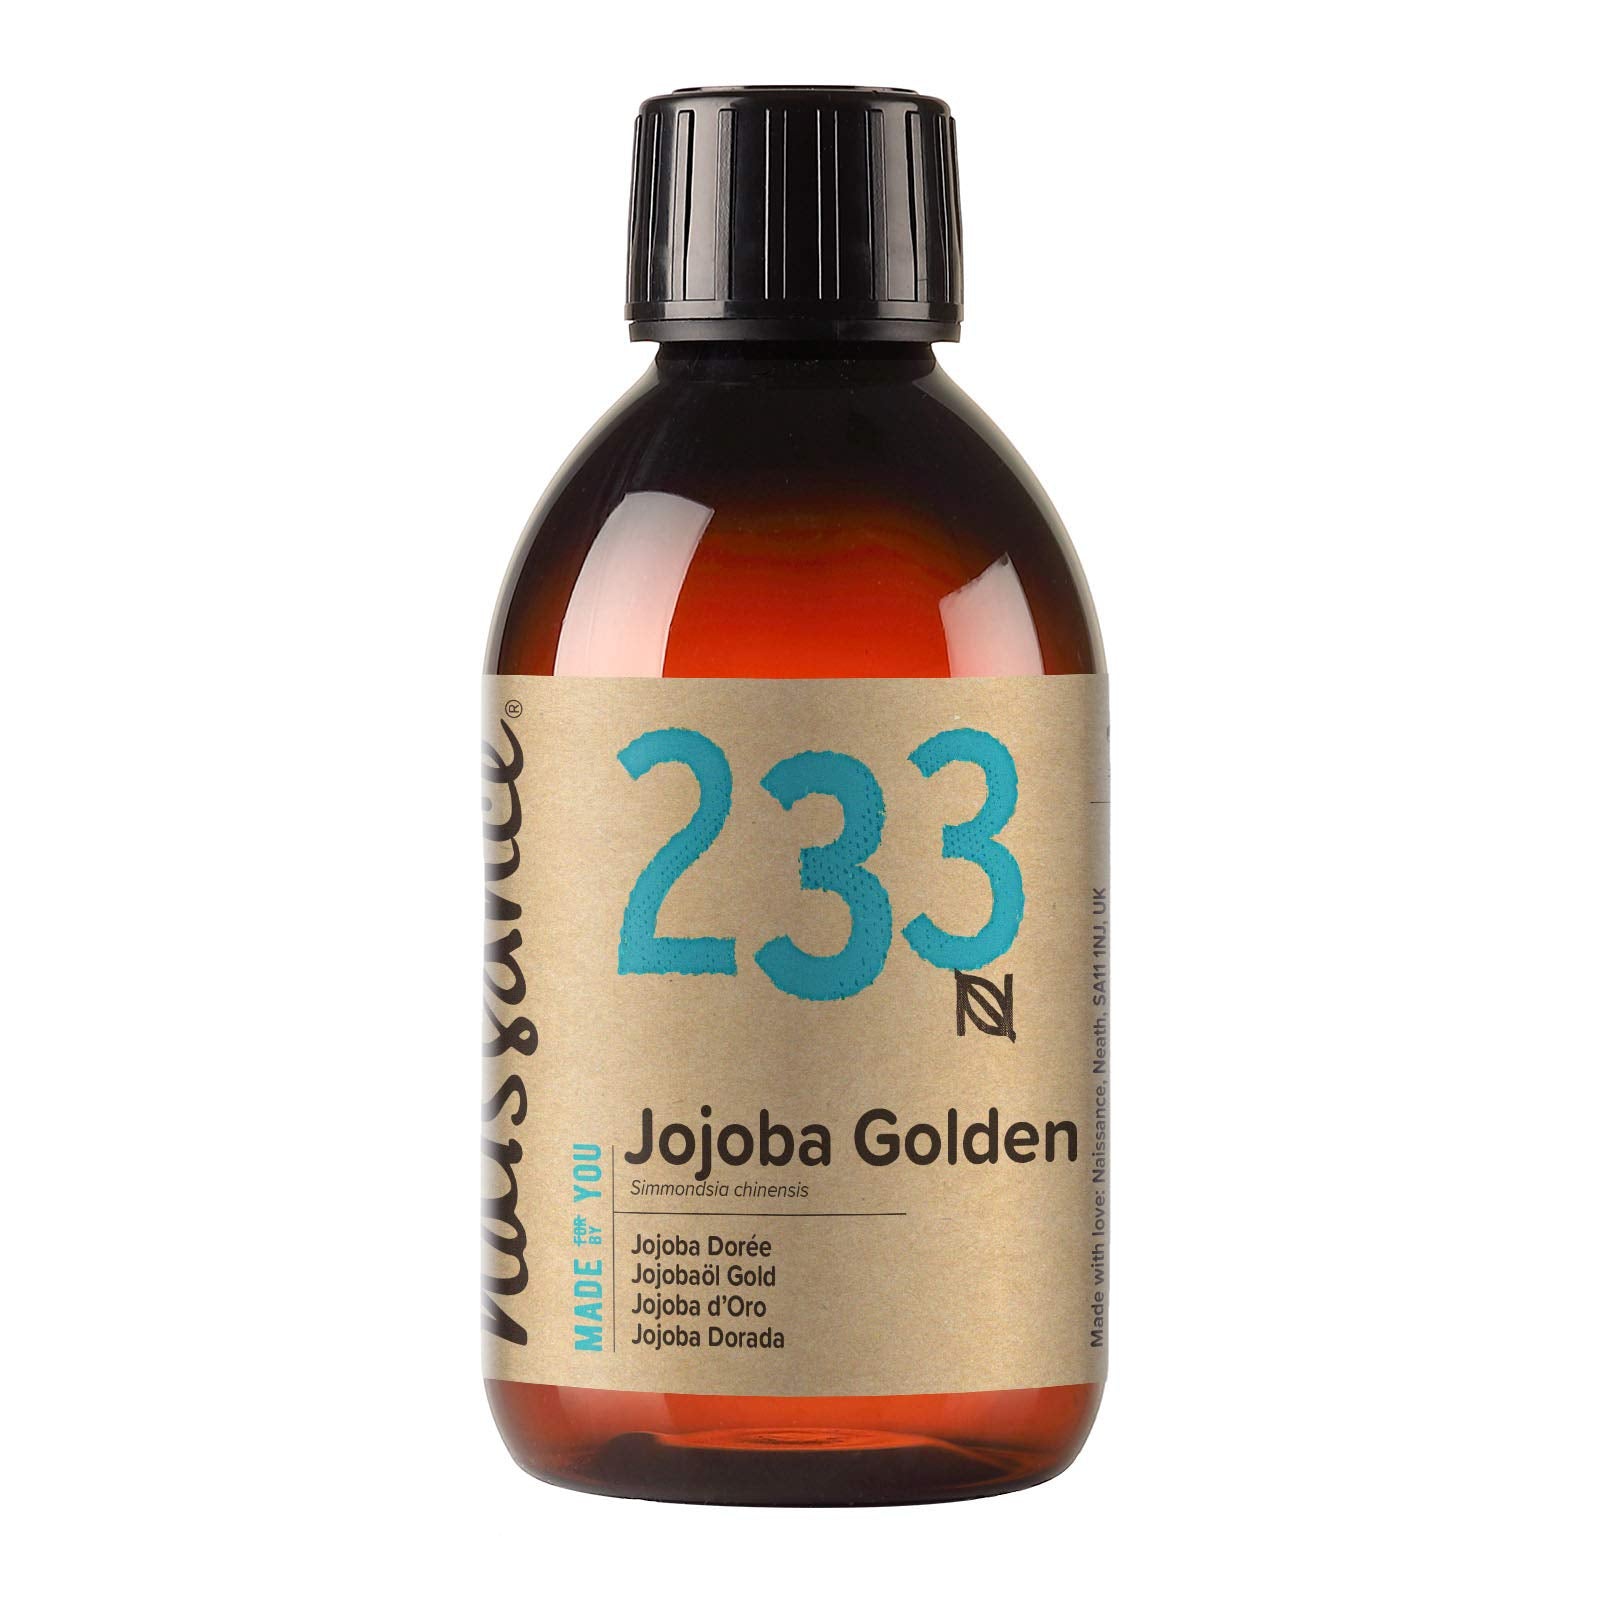 Naissance Golden Jojoba Oil (No. 233) 250ml - Pure Cold Pressed Unrefined - Natural Moisturiser for Skin, Face, Nails, Hair - Aromatherapy, Massage, Vegan, Hexane Free, DYI Beauty